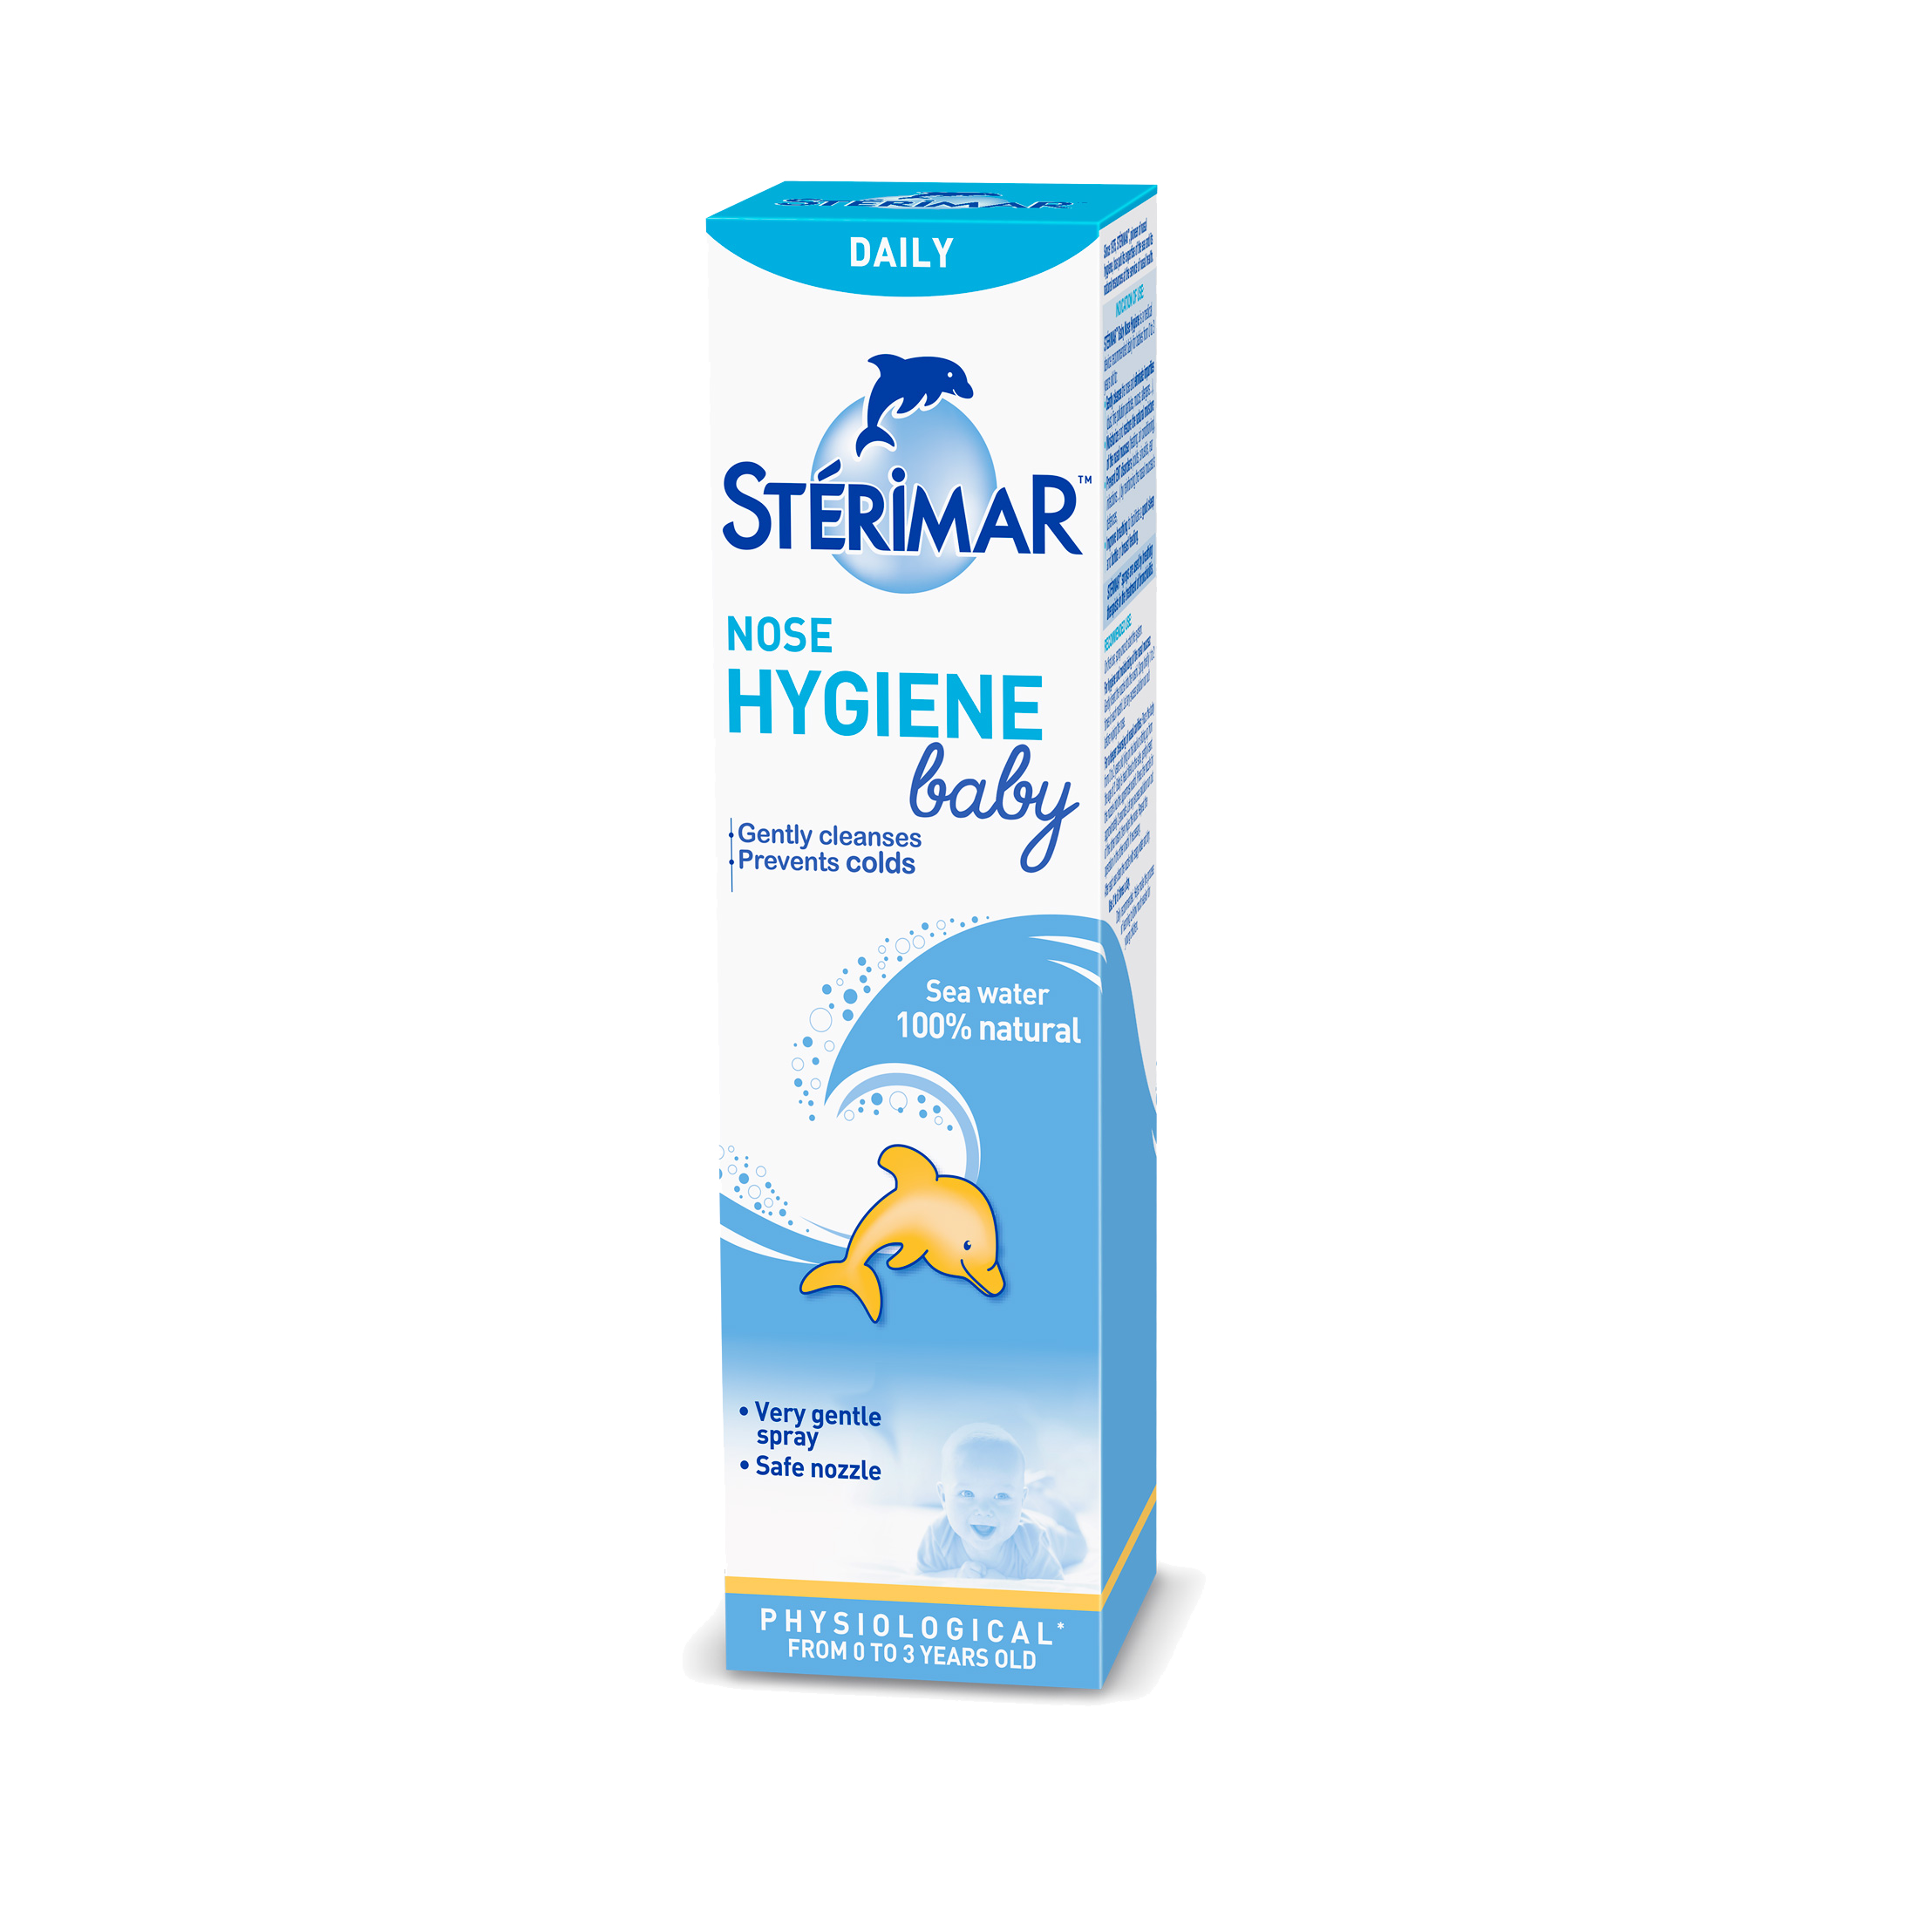 3x 100ml) Sterimar Baby Hygiene Nasal Spray 0-3 year old Cleans Nose Gentle  DHL